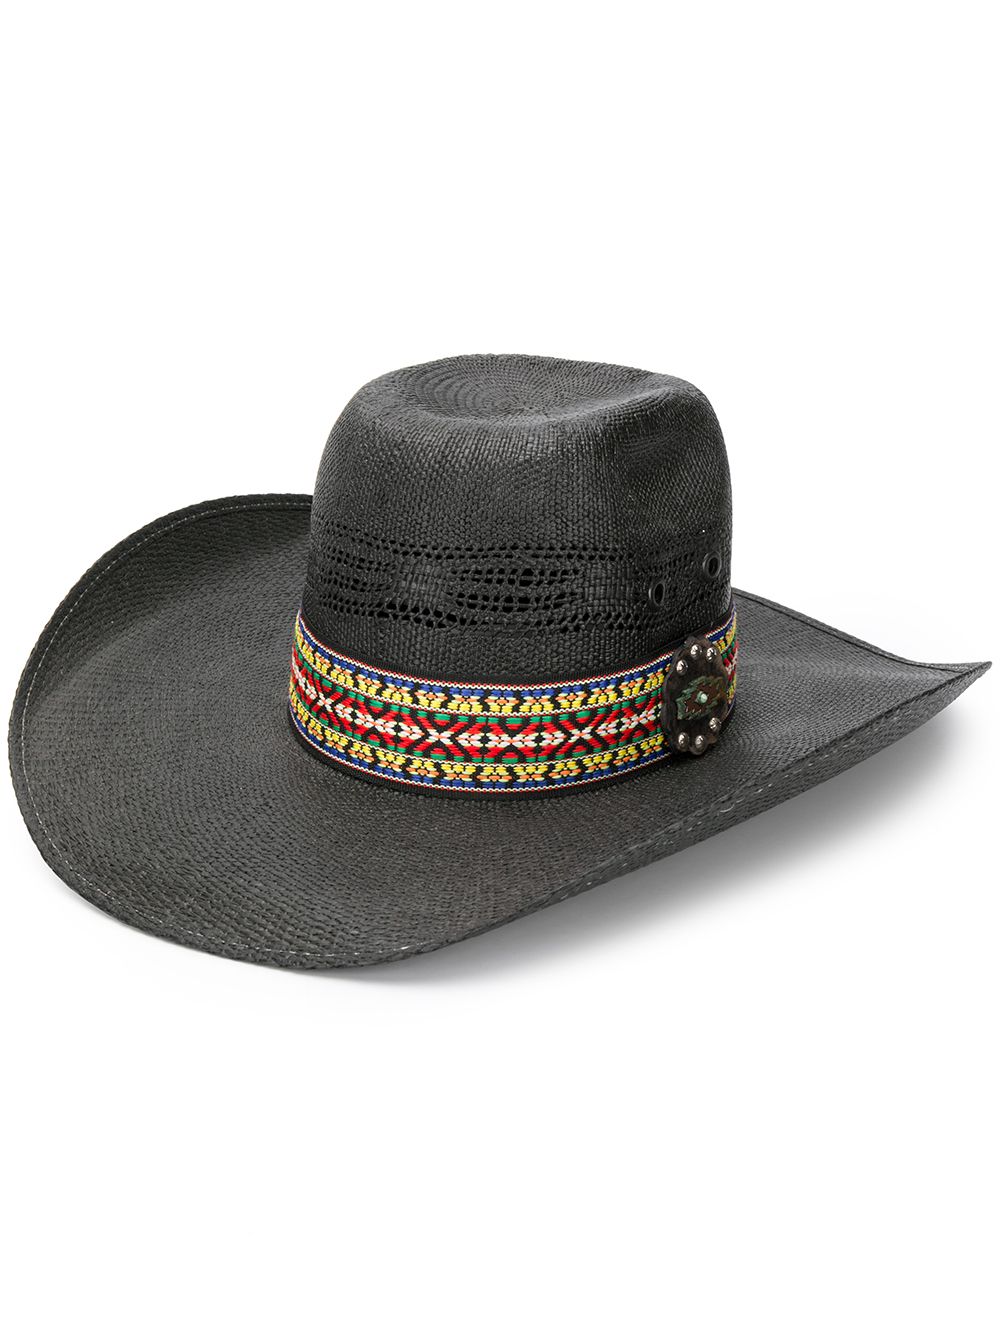 фото Jessie western соломенная шляпа